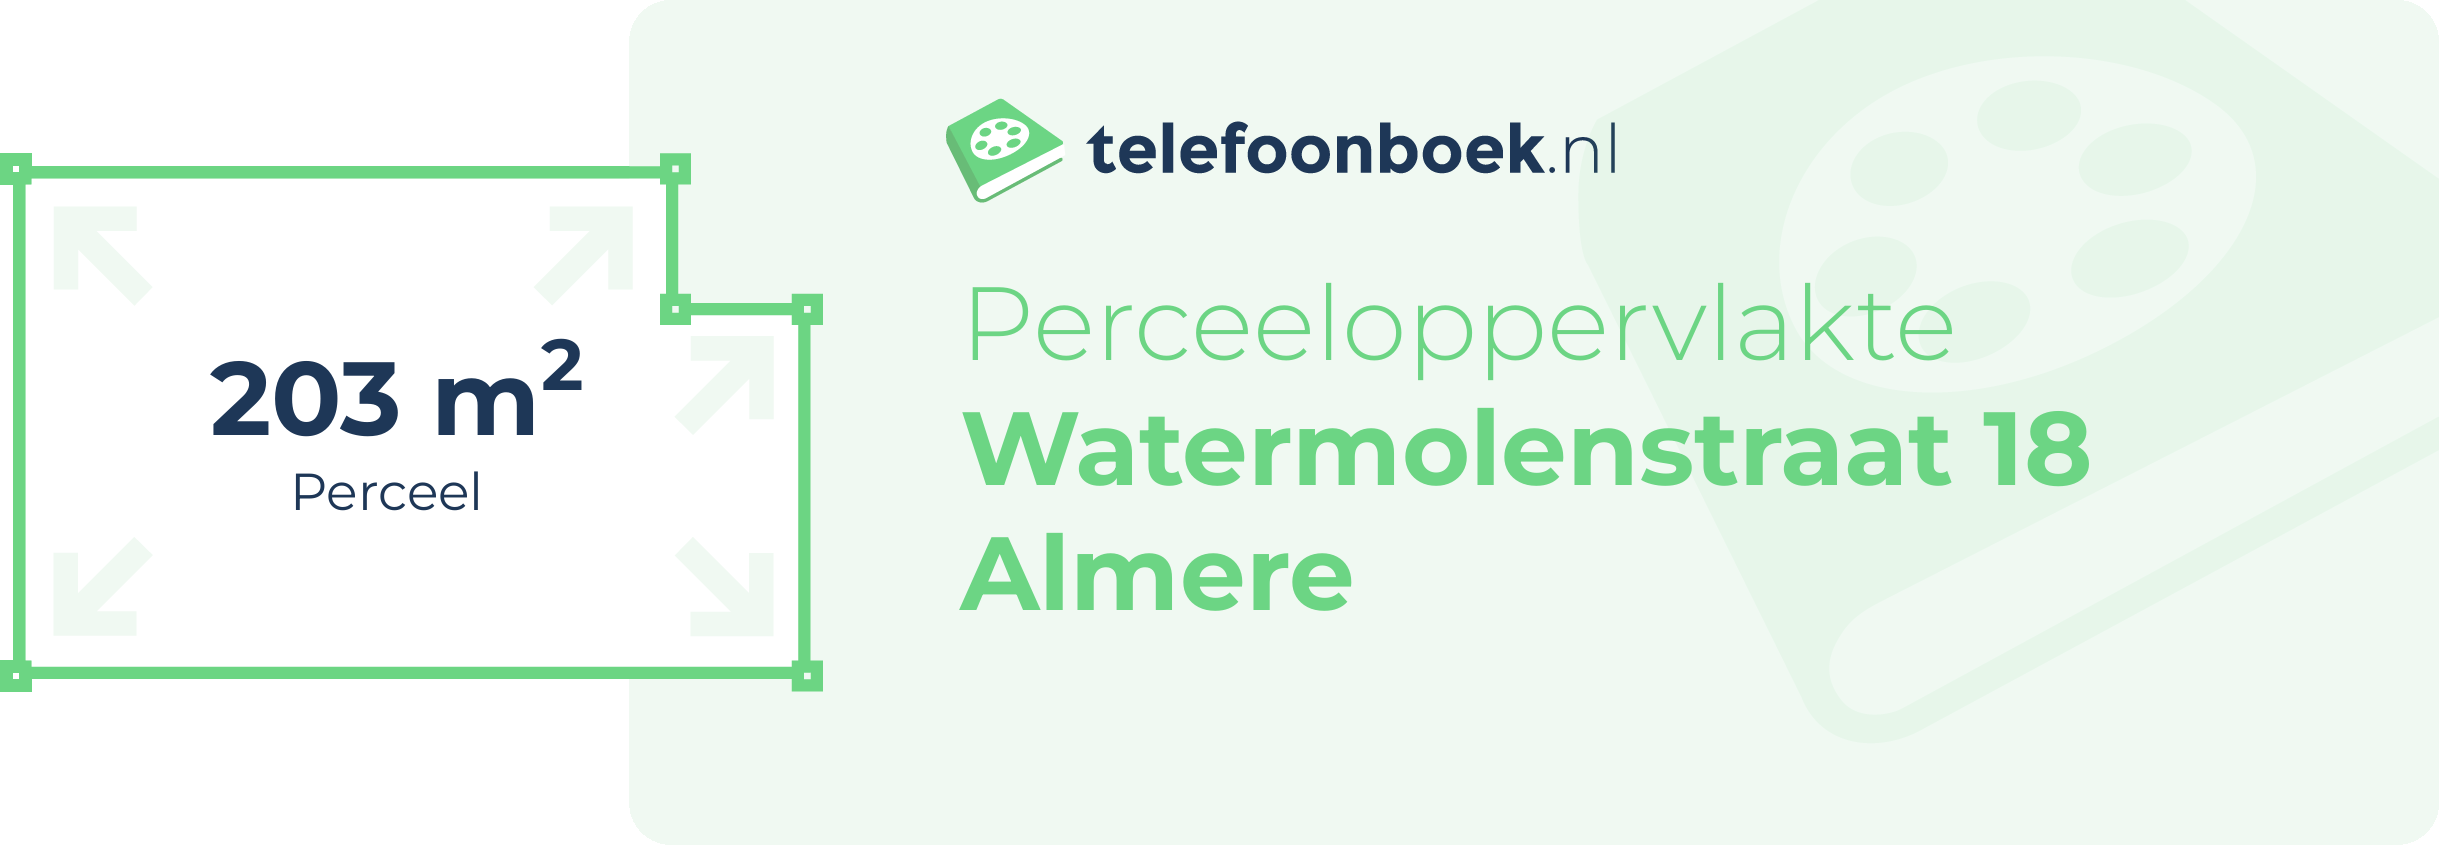 Perceeloppervlakte Watermolenstraat 18 Almere